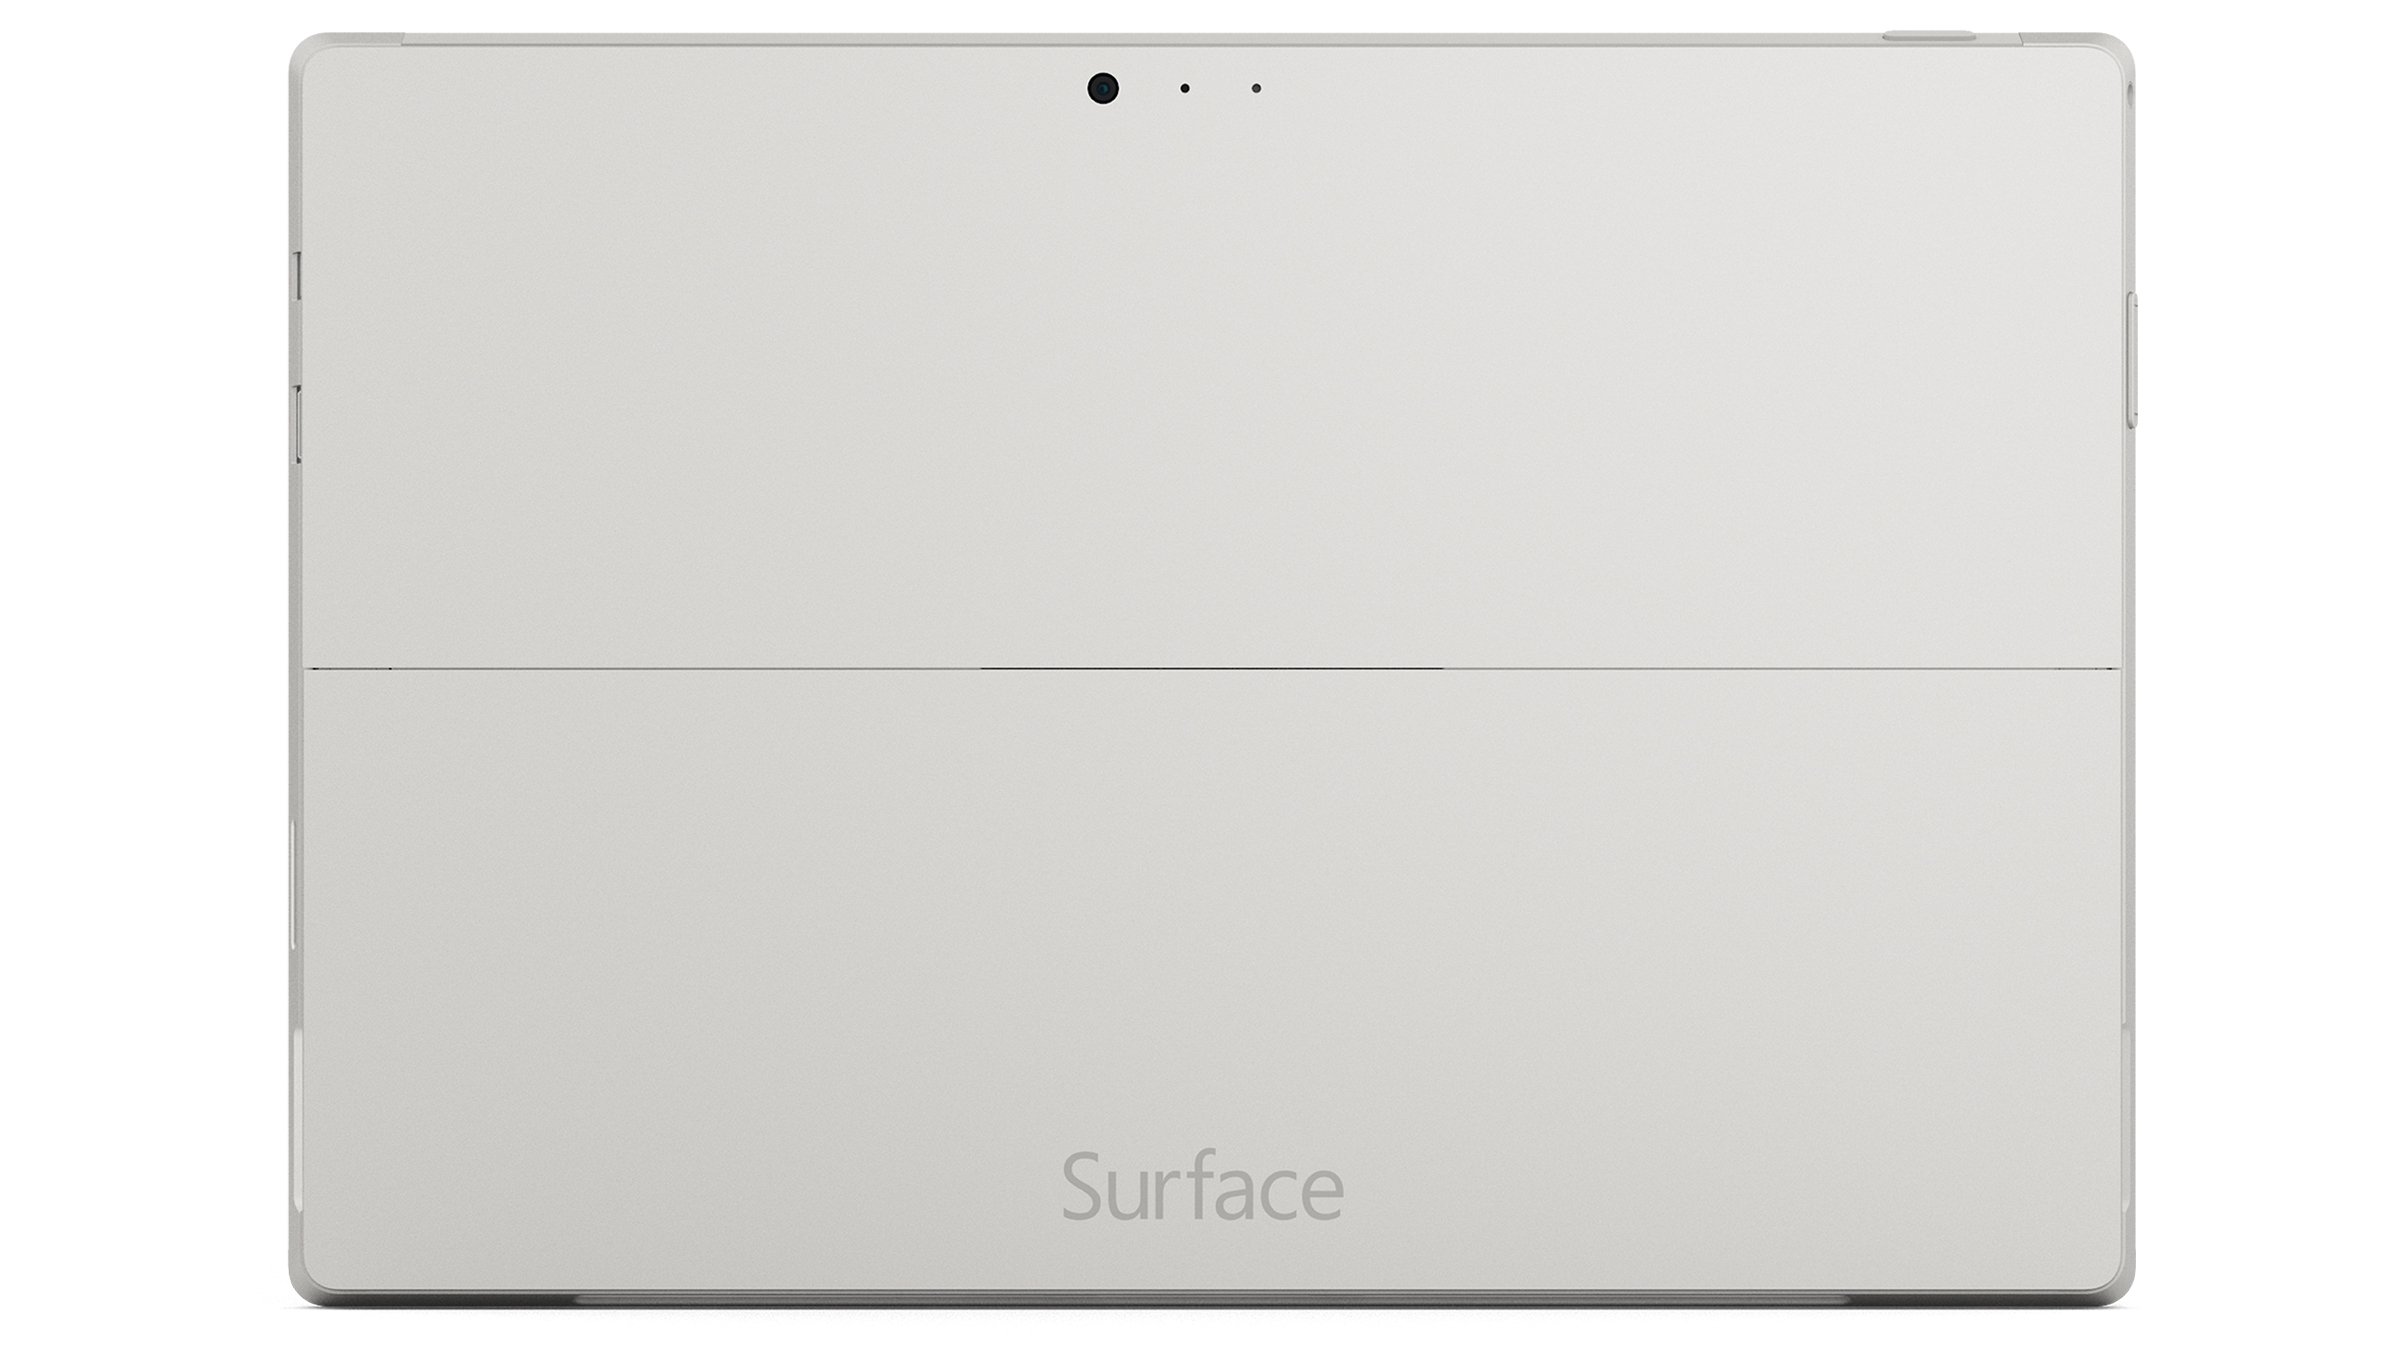 Microsoft Surface Pro 3 Tablet PC - Intel Core i5-4300U 1.9GHz 4GB 128GB SSD Windows 10.1 (Renewed)